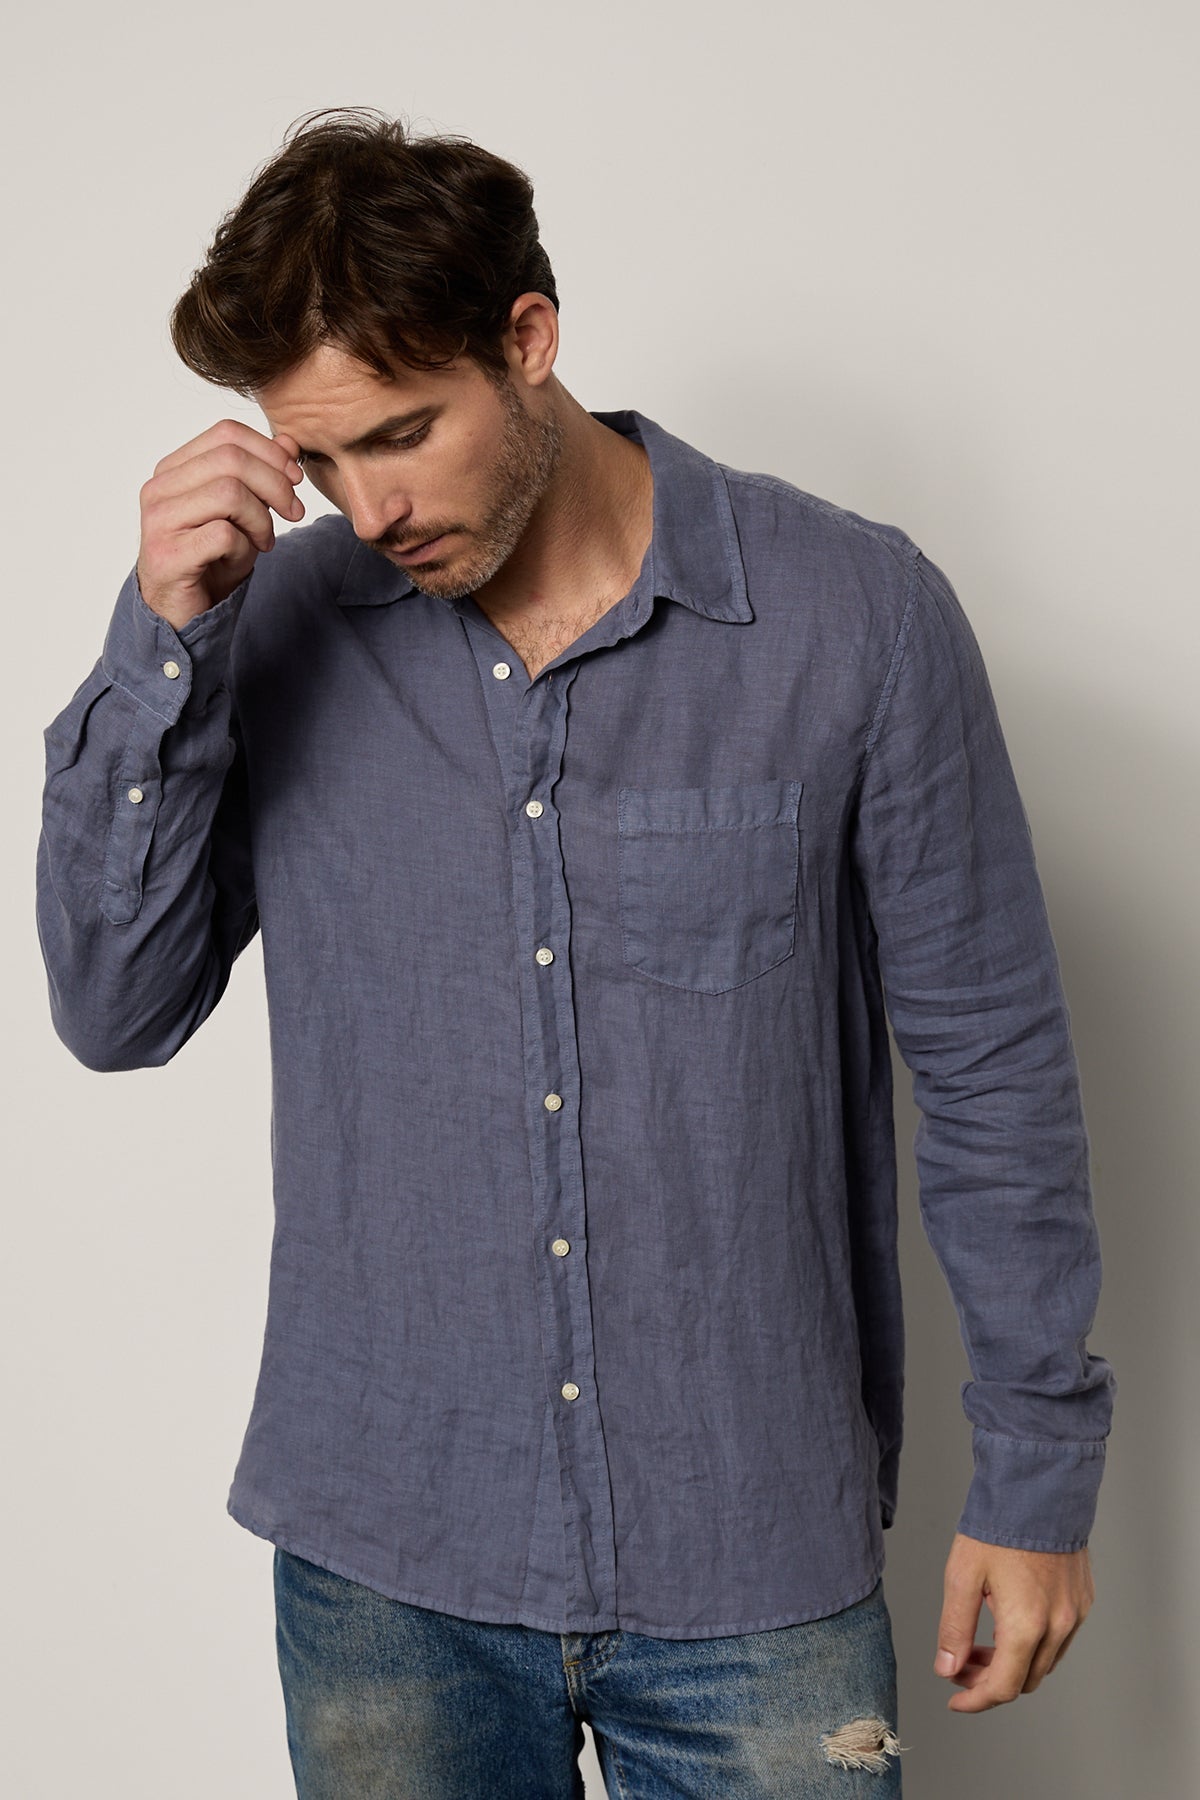 Benton Button-Up Shirt in baltic blue linen with worn denim front-35955069255873